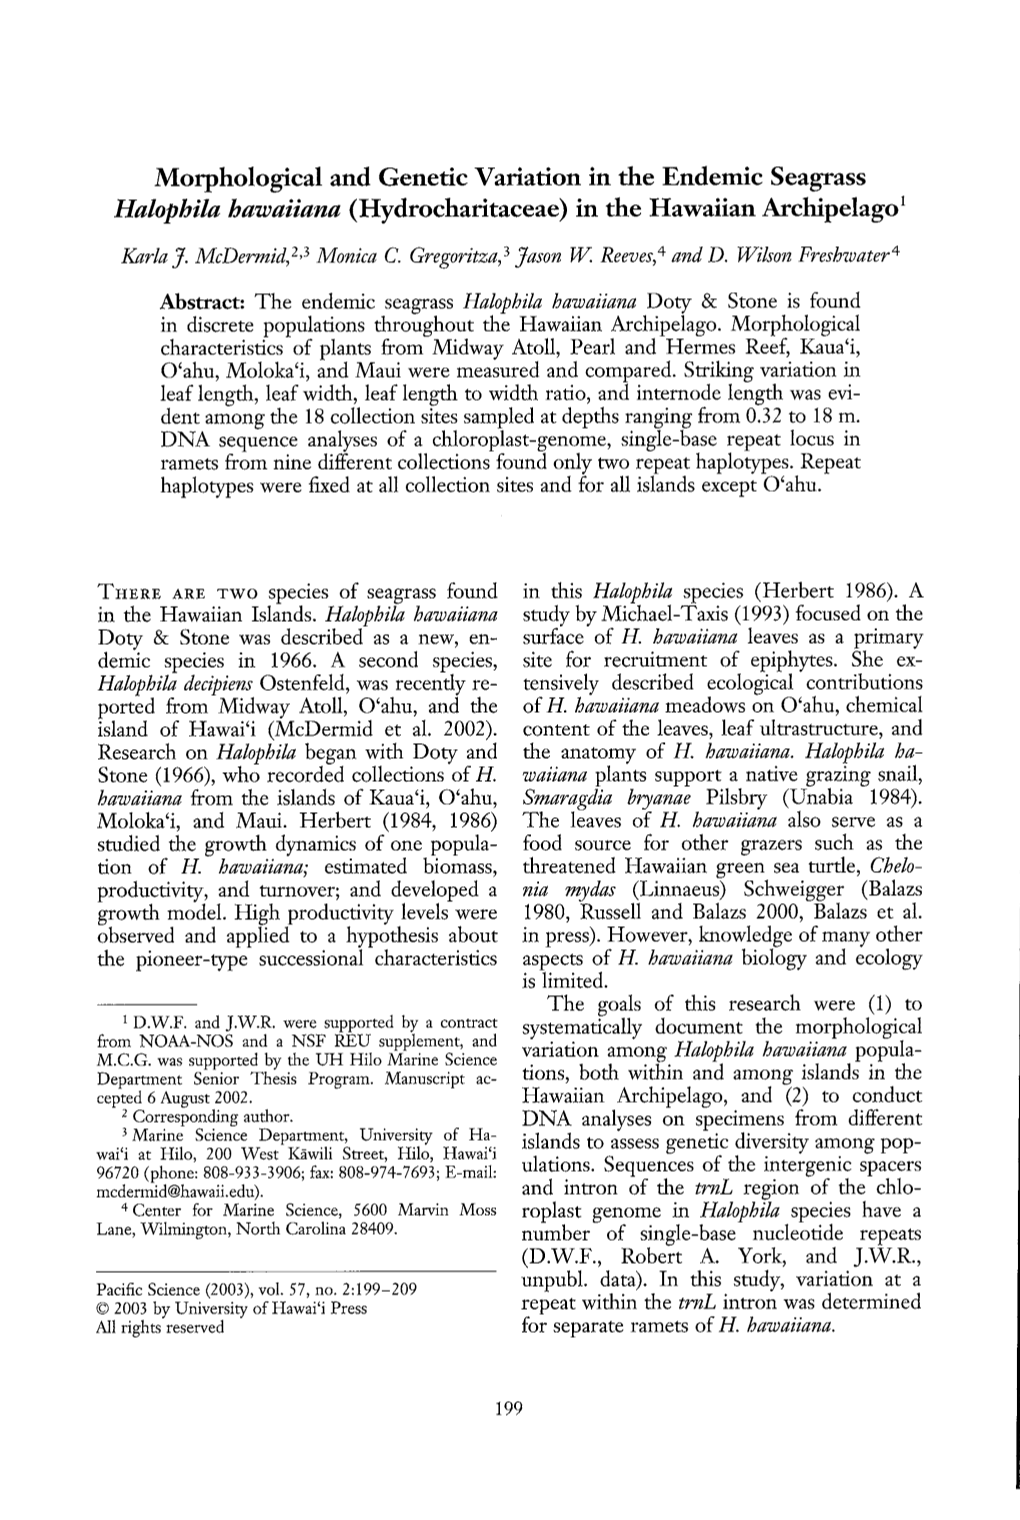 Morphological and Genetic Variation in the Endemic Seagrass Halophila Hawaiiana (Hydrocharitaceae) in the Hawaiian Archipelago L